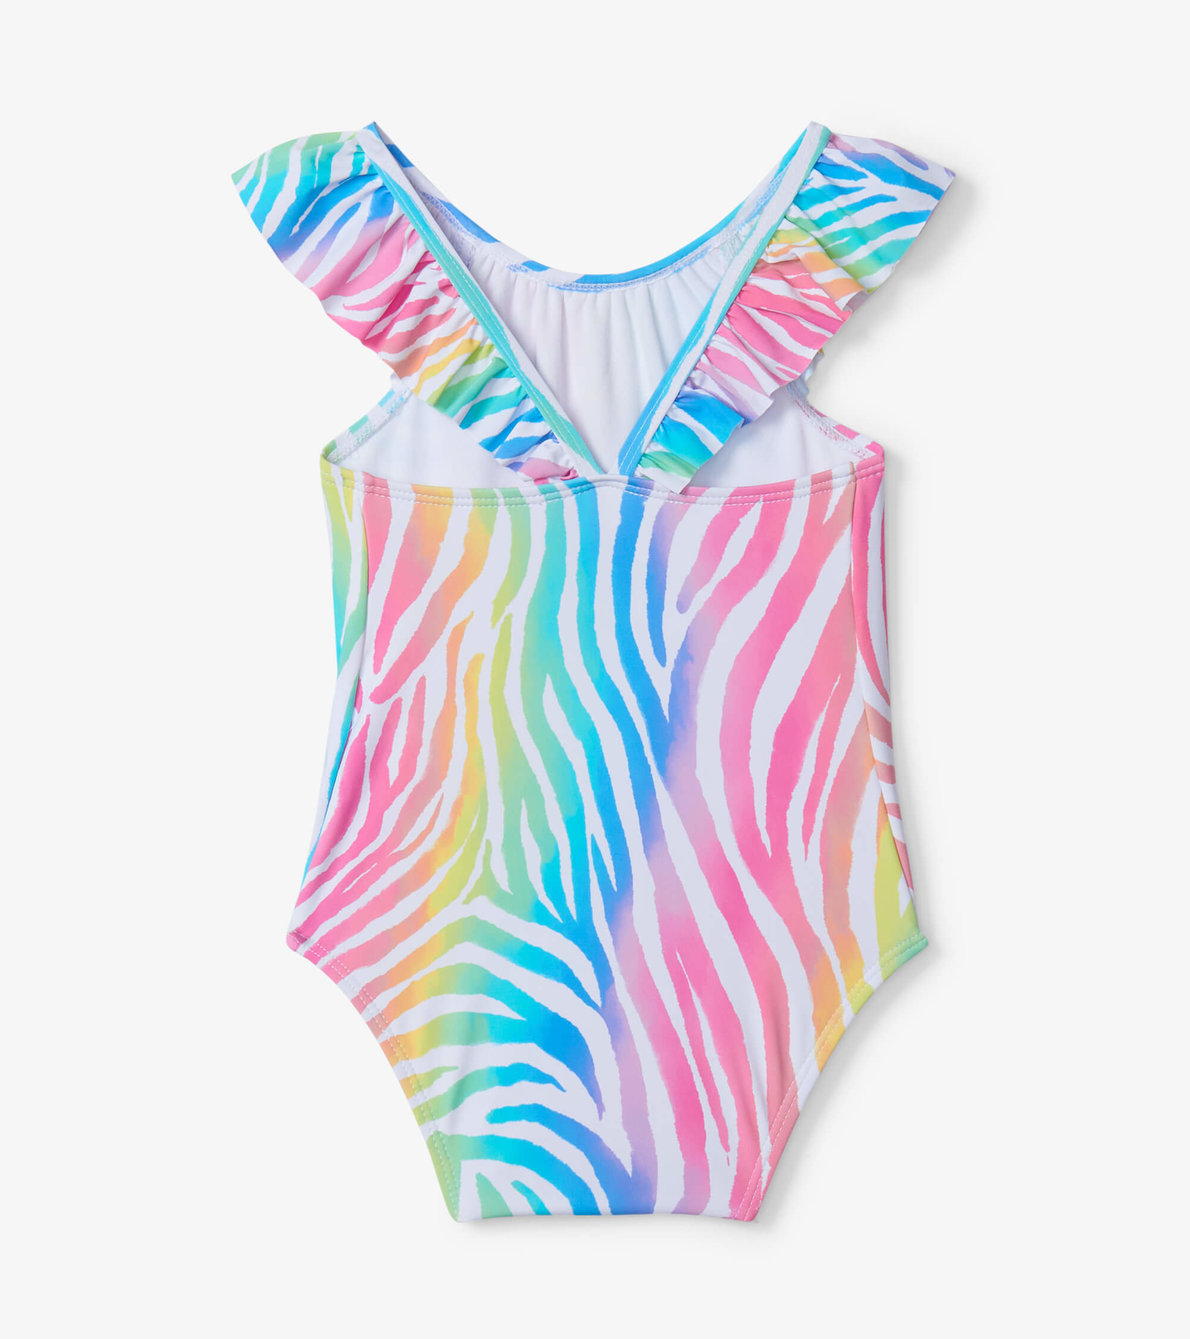 View larger image of Rainbow Zebra Baby Ruffle Swimsuit